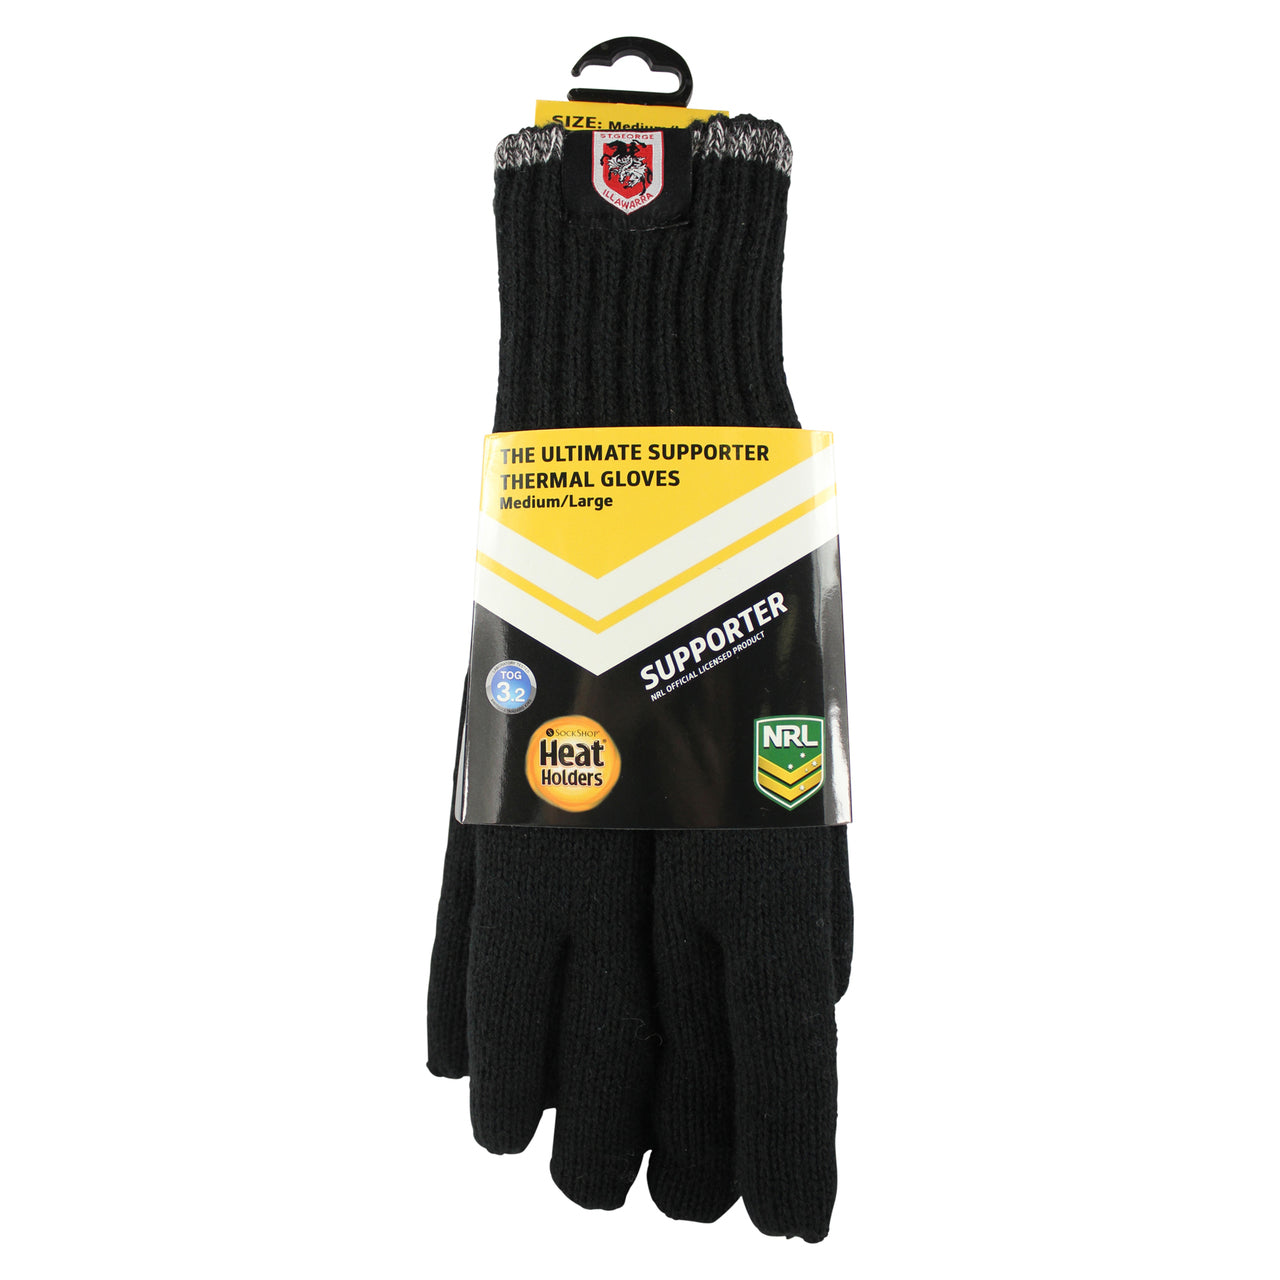 NRL Heat Holders Thermal Gloves St. George Illawarra Dragons